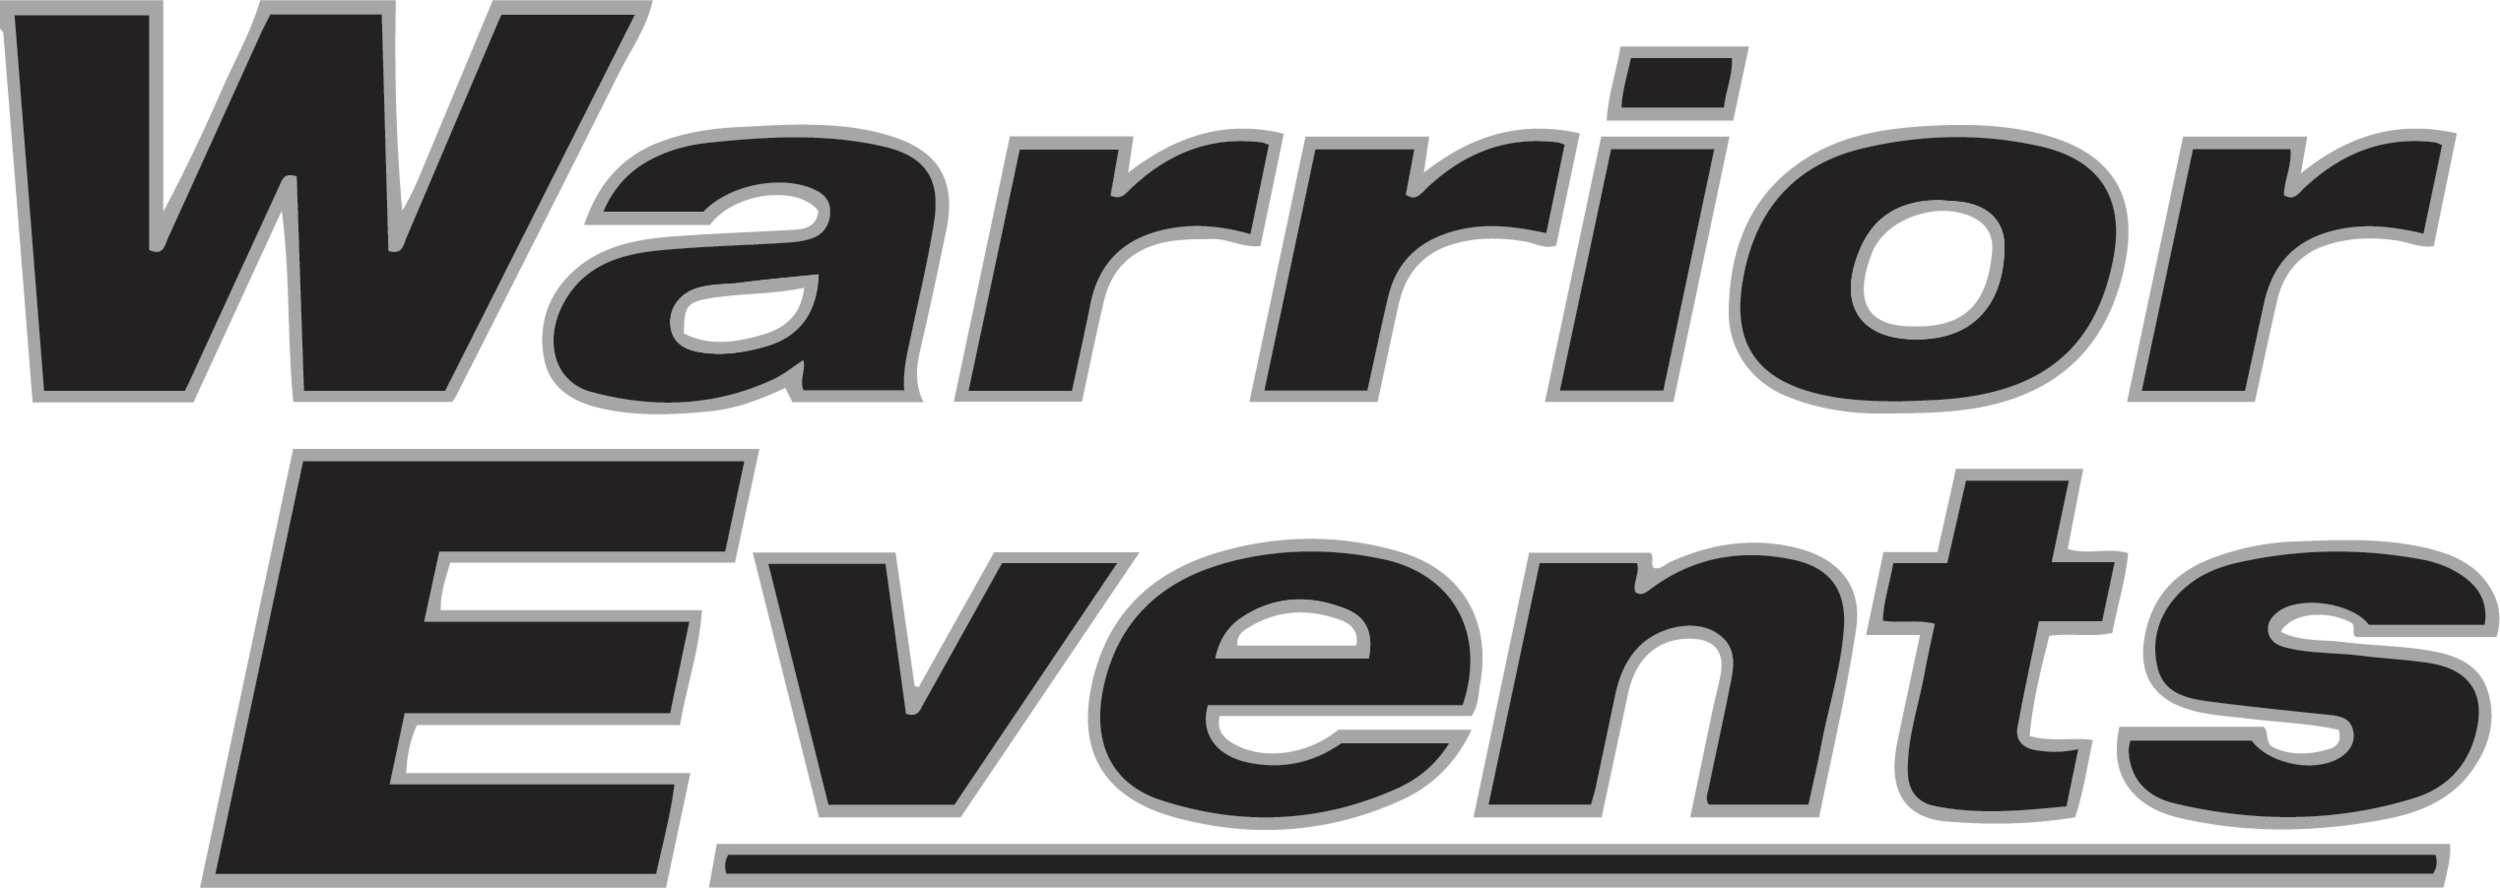 WarriorEvents_Logo.png